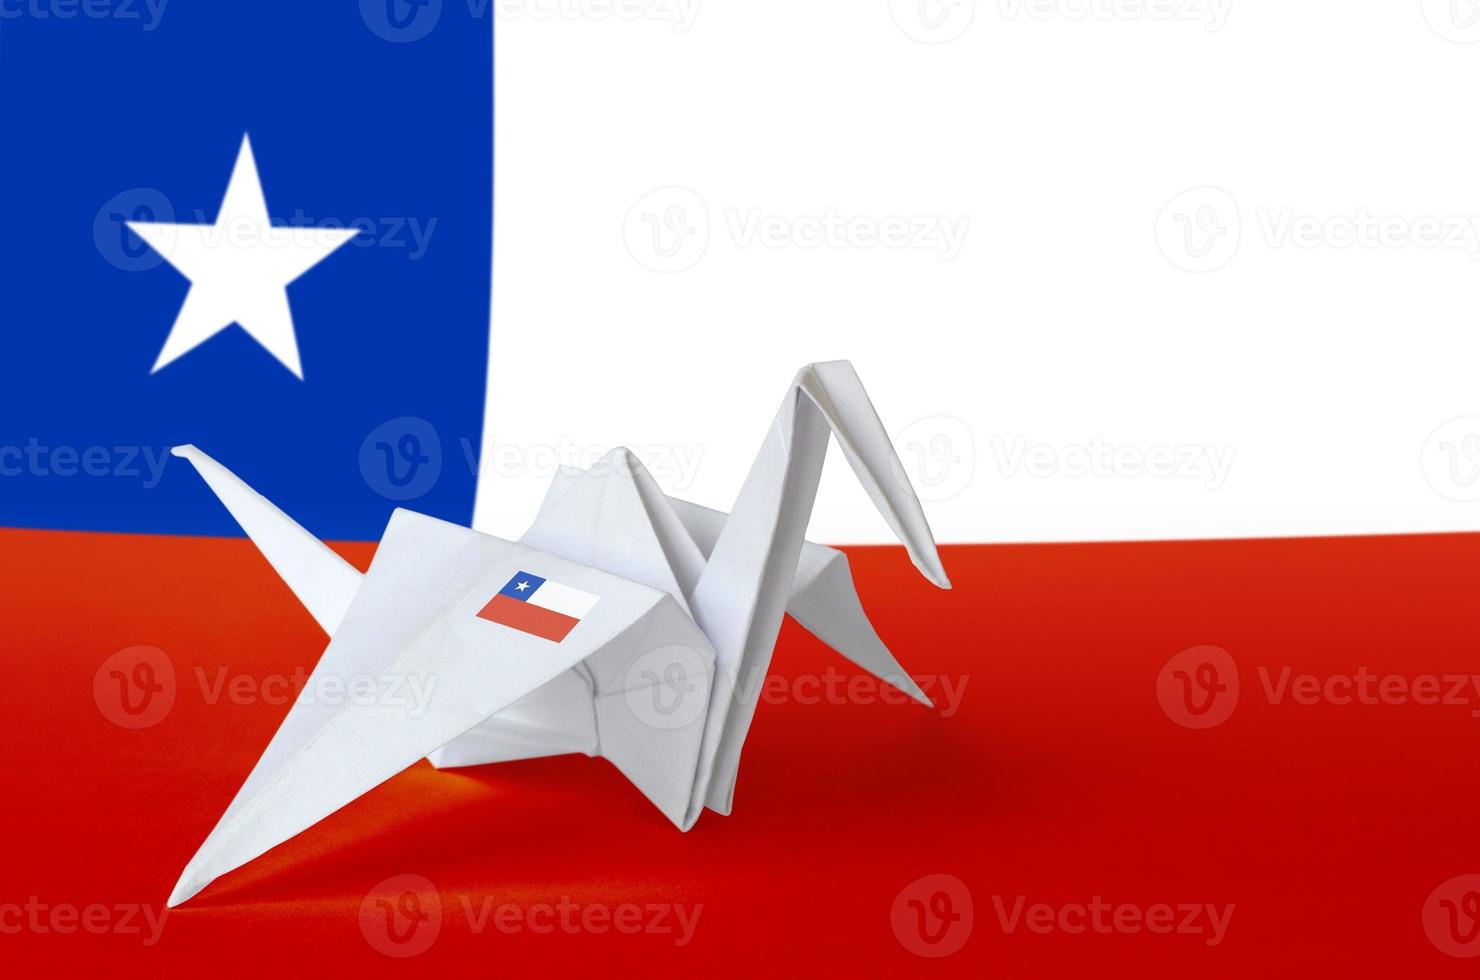 bandeira do chile retratada na asa de guindaste de origami de papel. conceito de artes artesanais foto